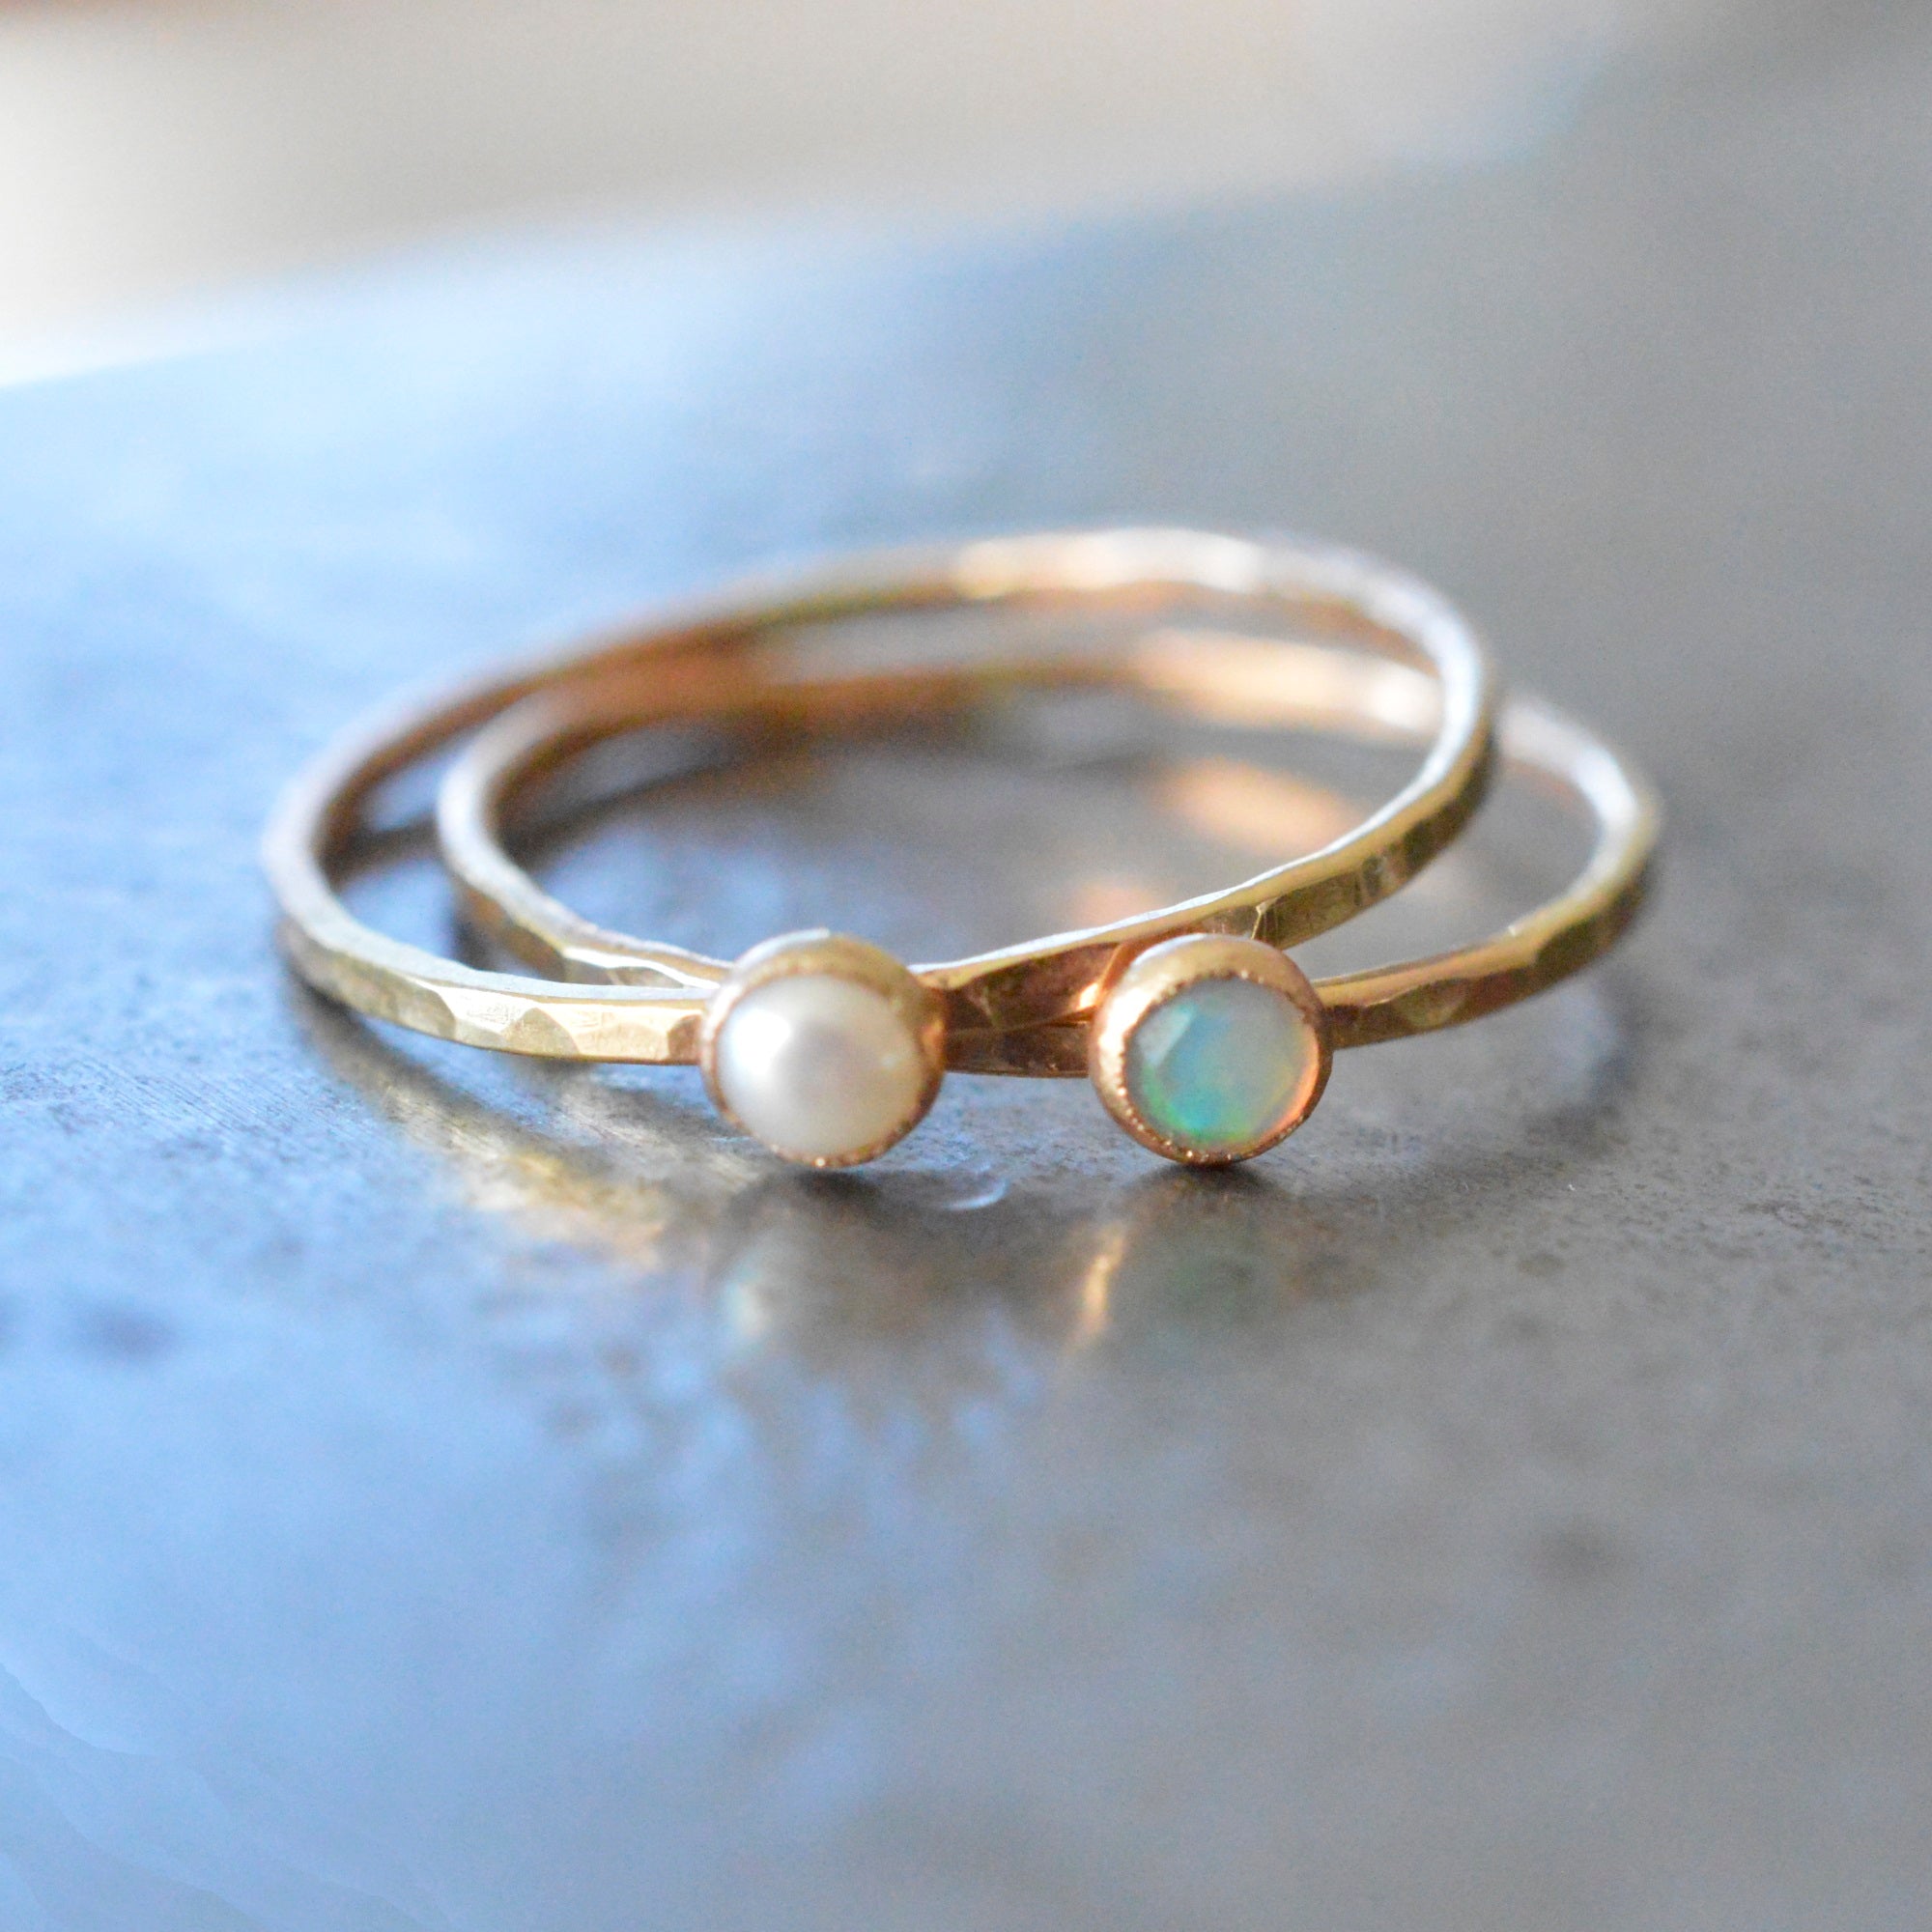 Green gemstone rings | Eden Garden Jewelry™